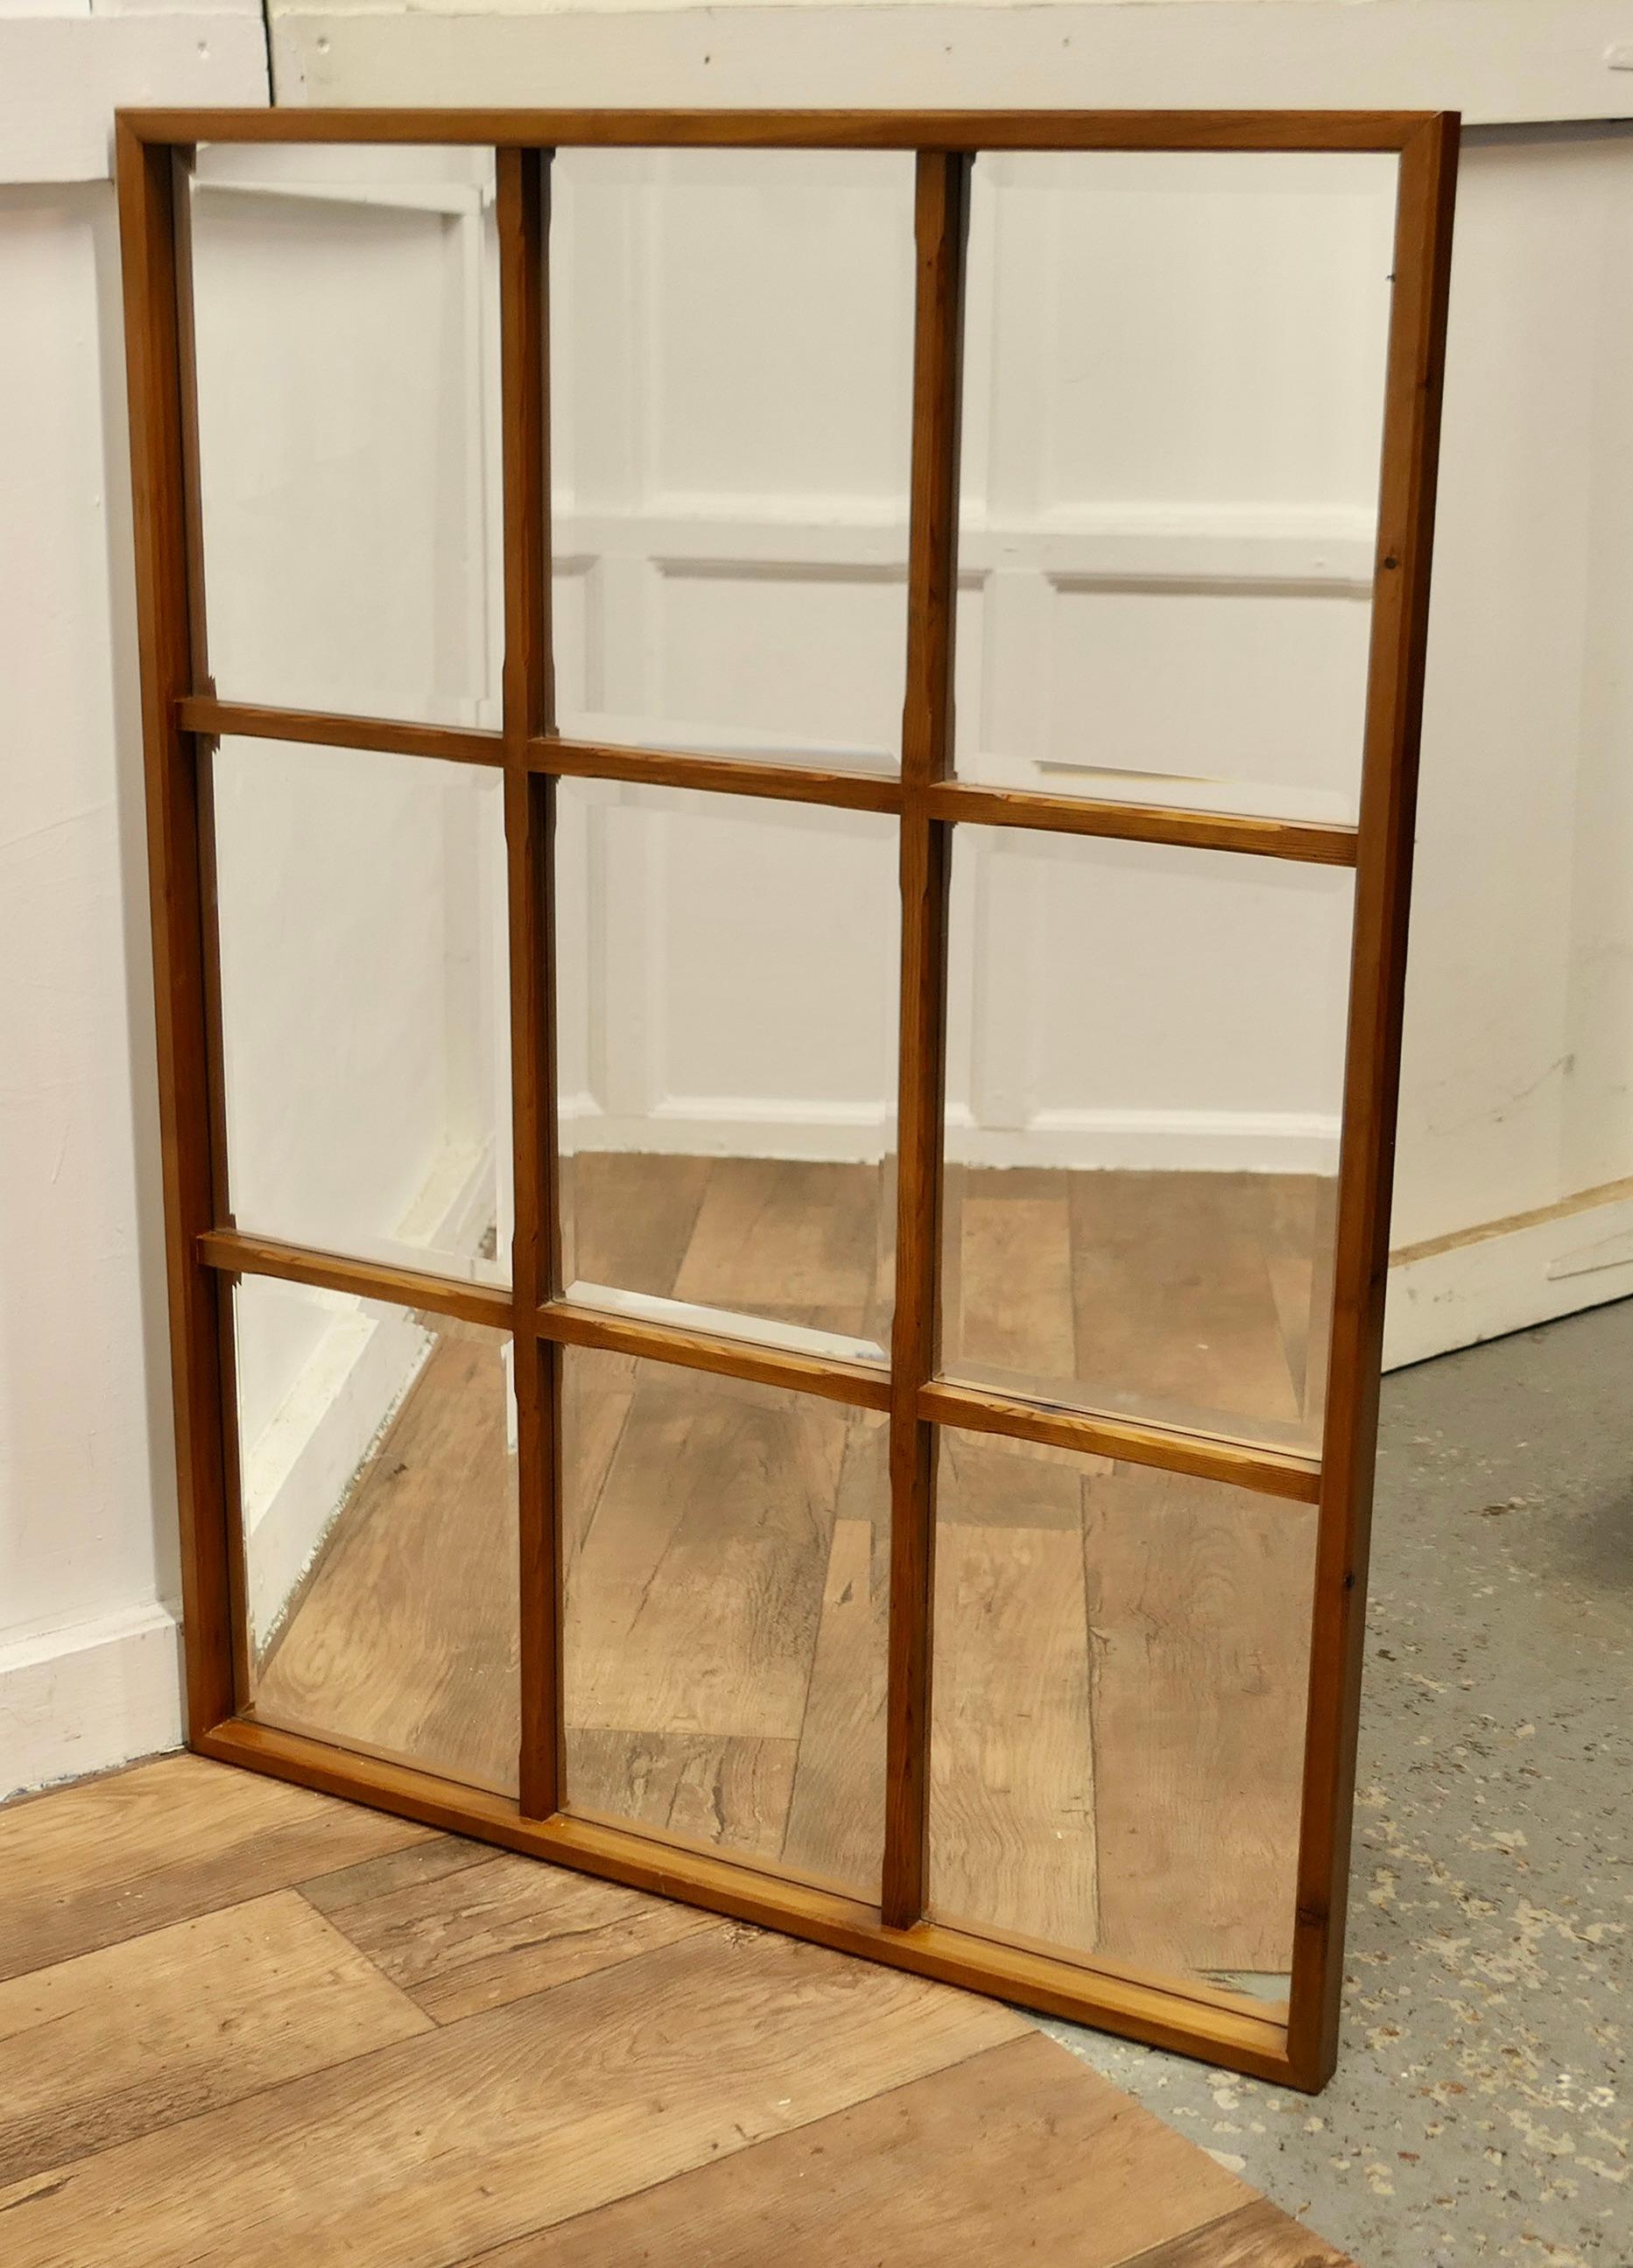 window pane mirror with shelf